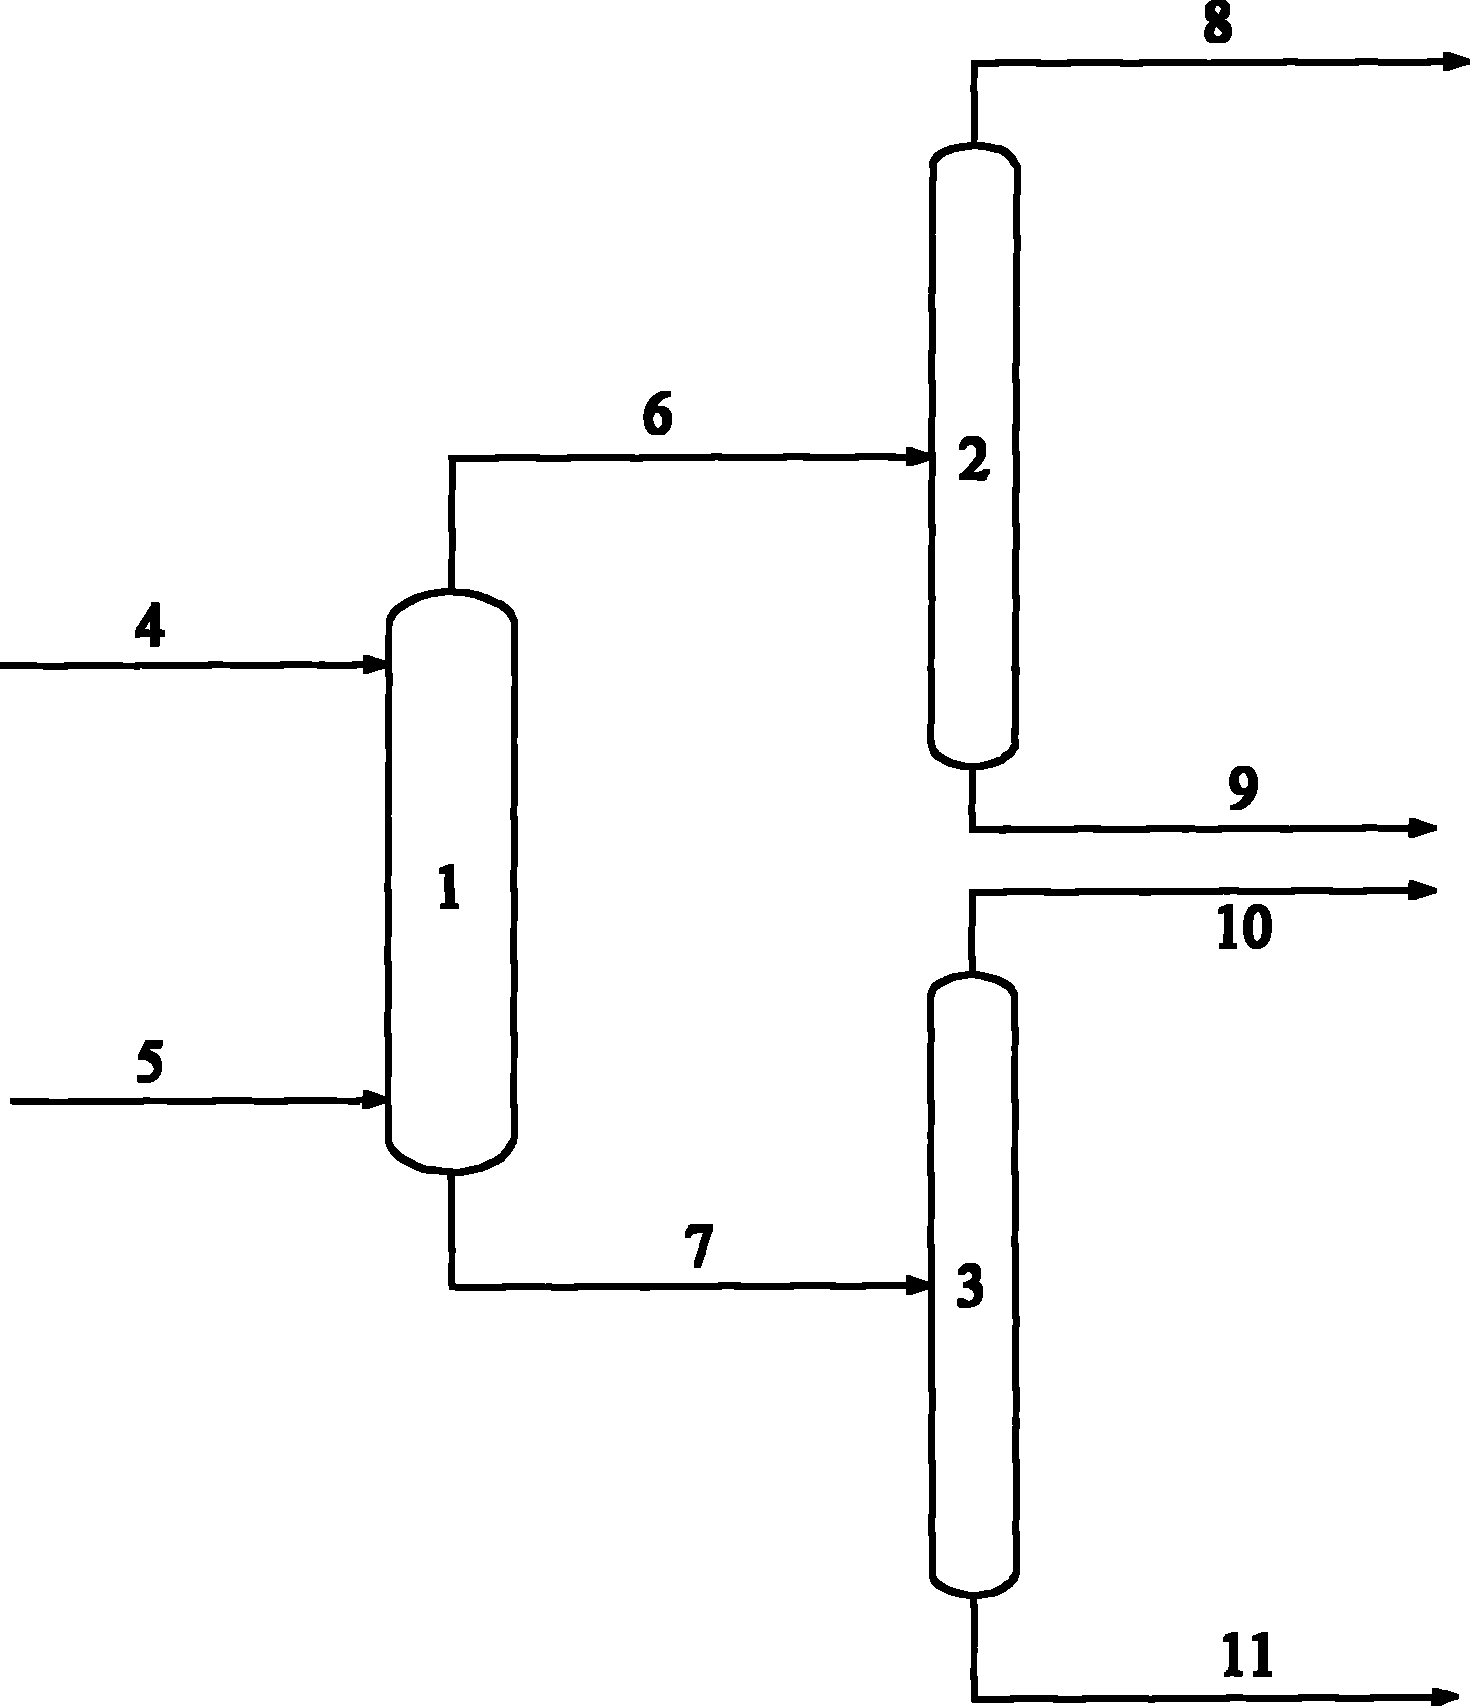 Separation method for glycol, propylene glycol and butylene glycol